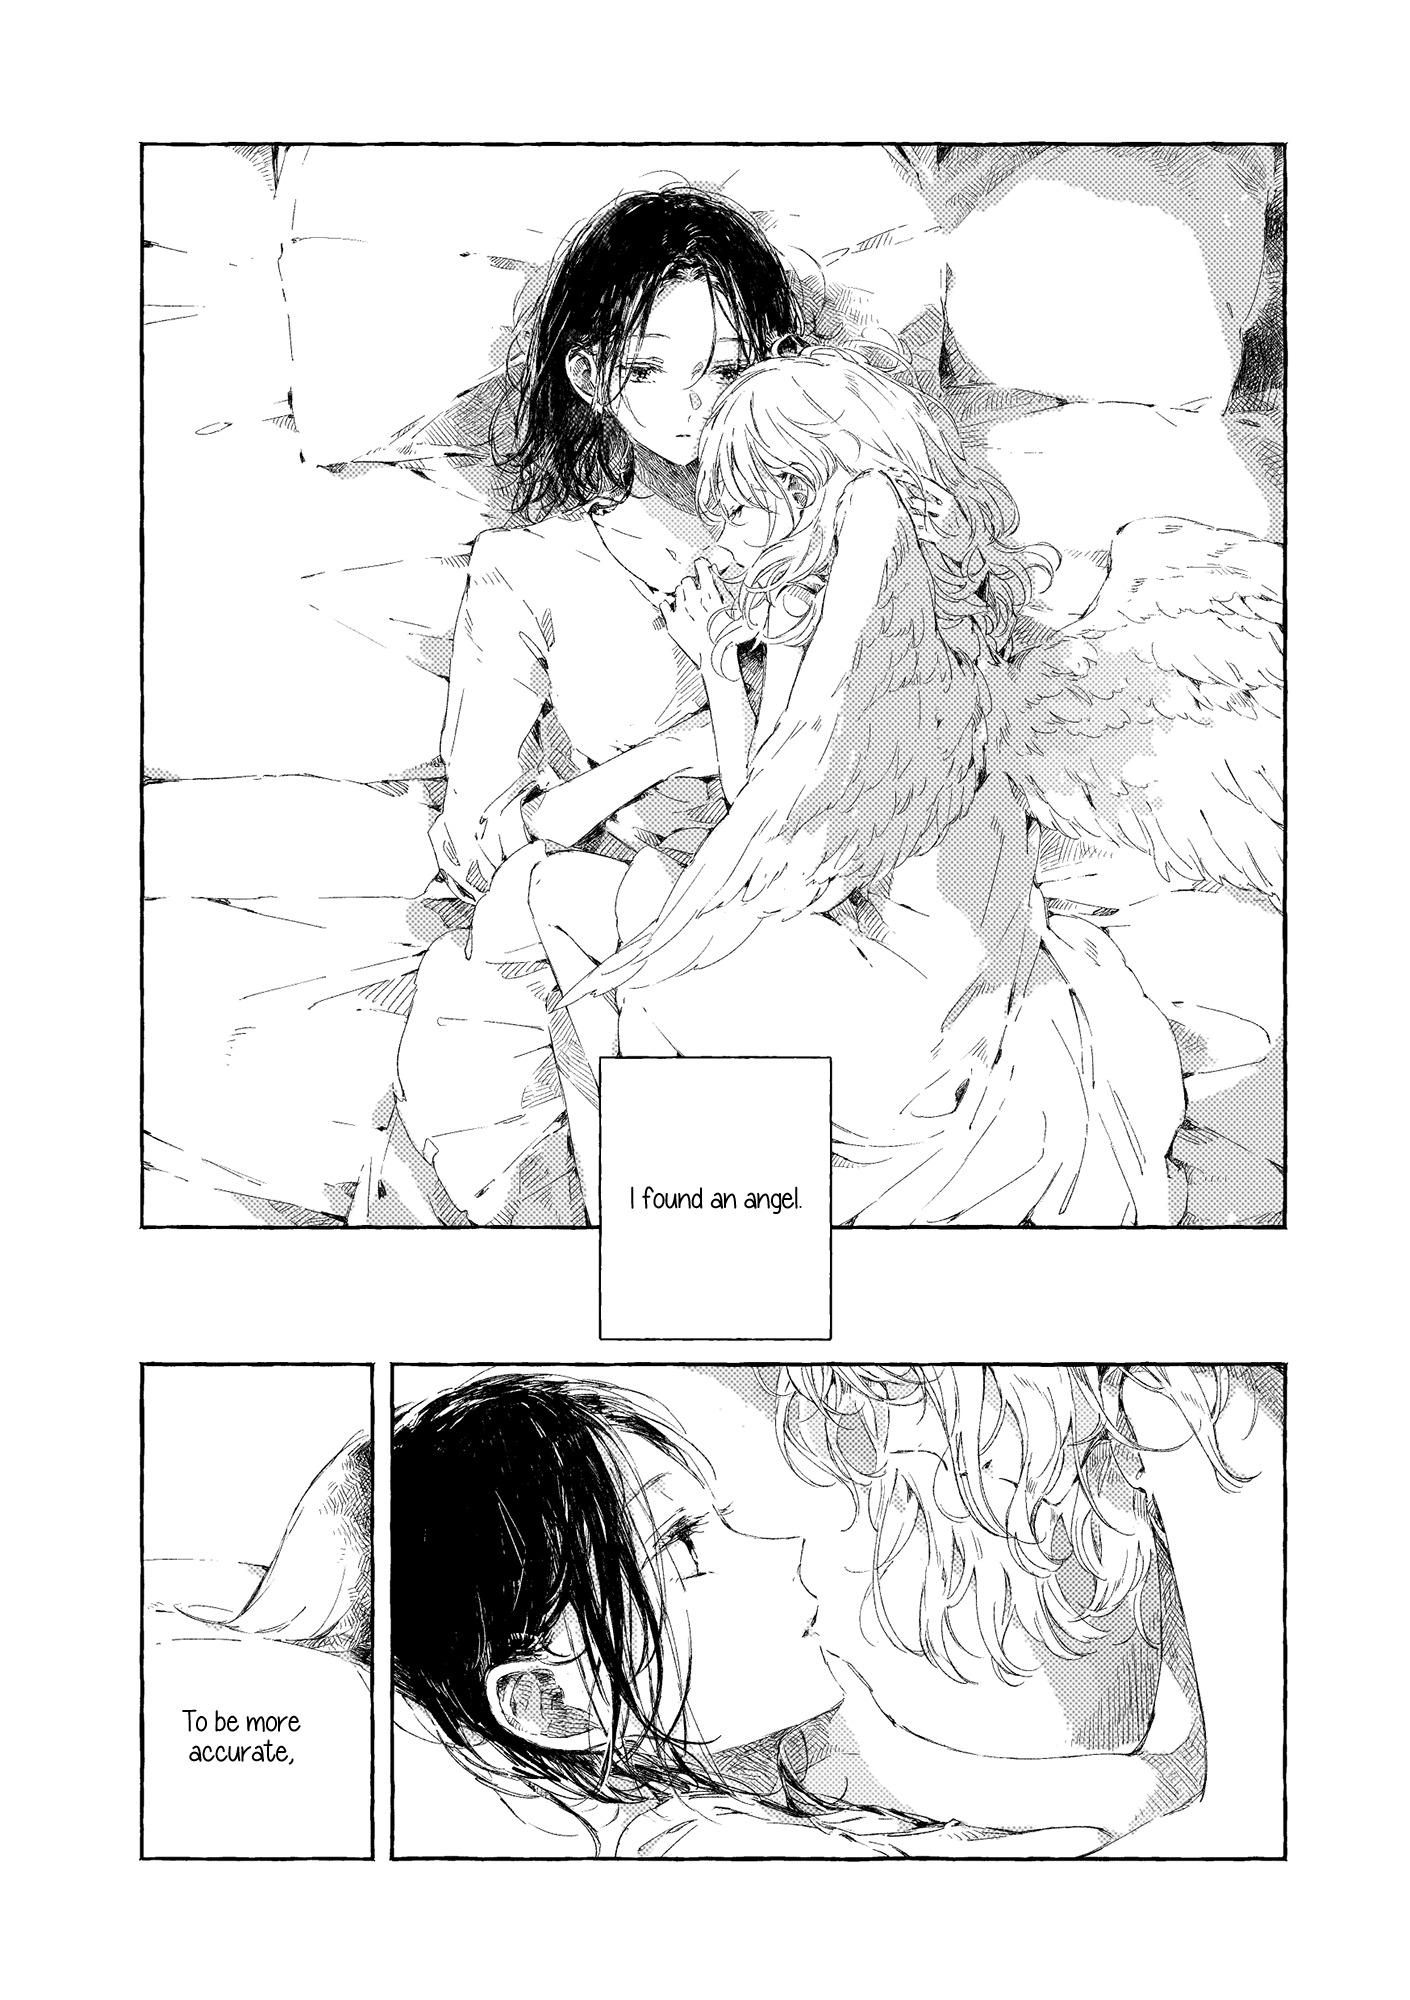 You Are My Angela Manga You Are My Angela Ch.0.5 Page 5 - Mangago